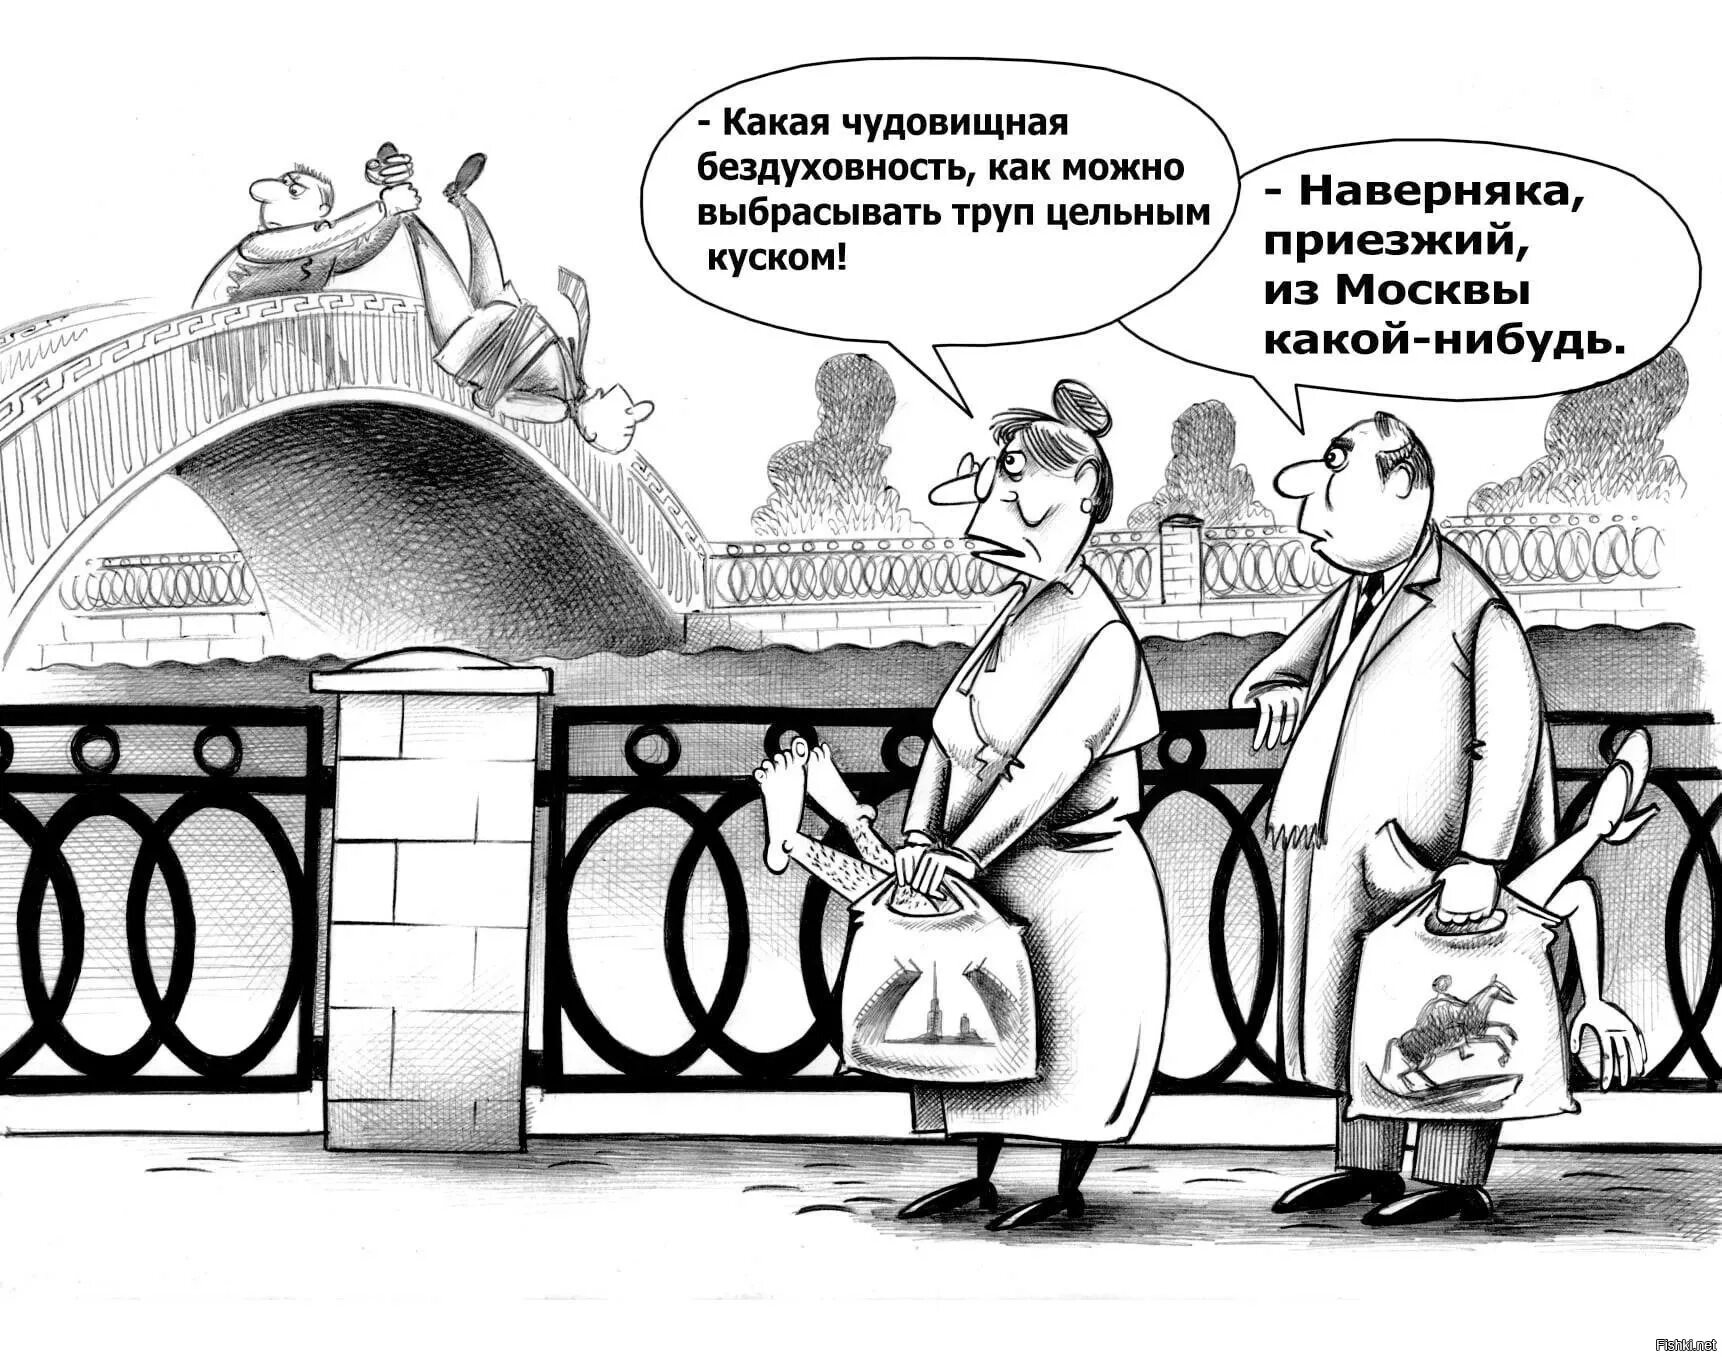 Скажи на 2 устройстве. Шутки про Петербург и расчлененку. Карикатура. Современные карикатуры. Шутки про Питер и расчлененку.